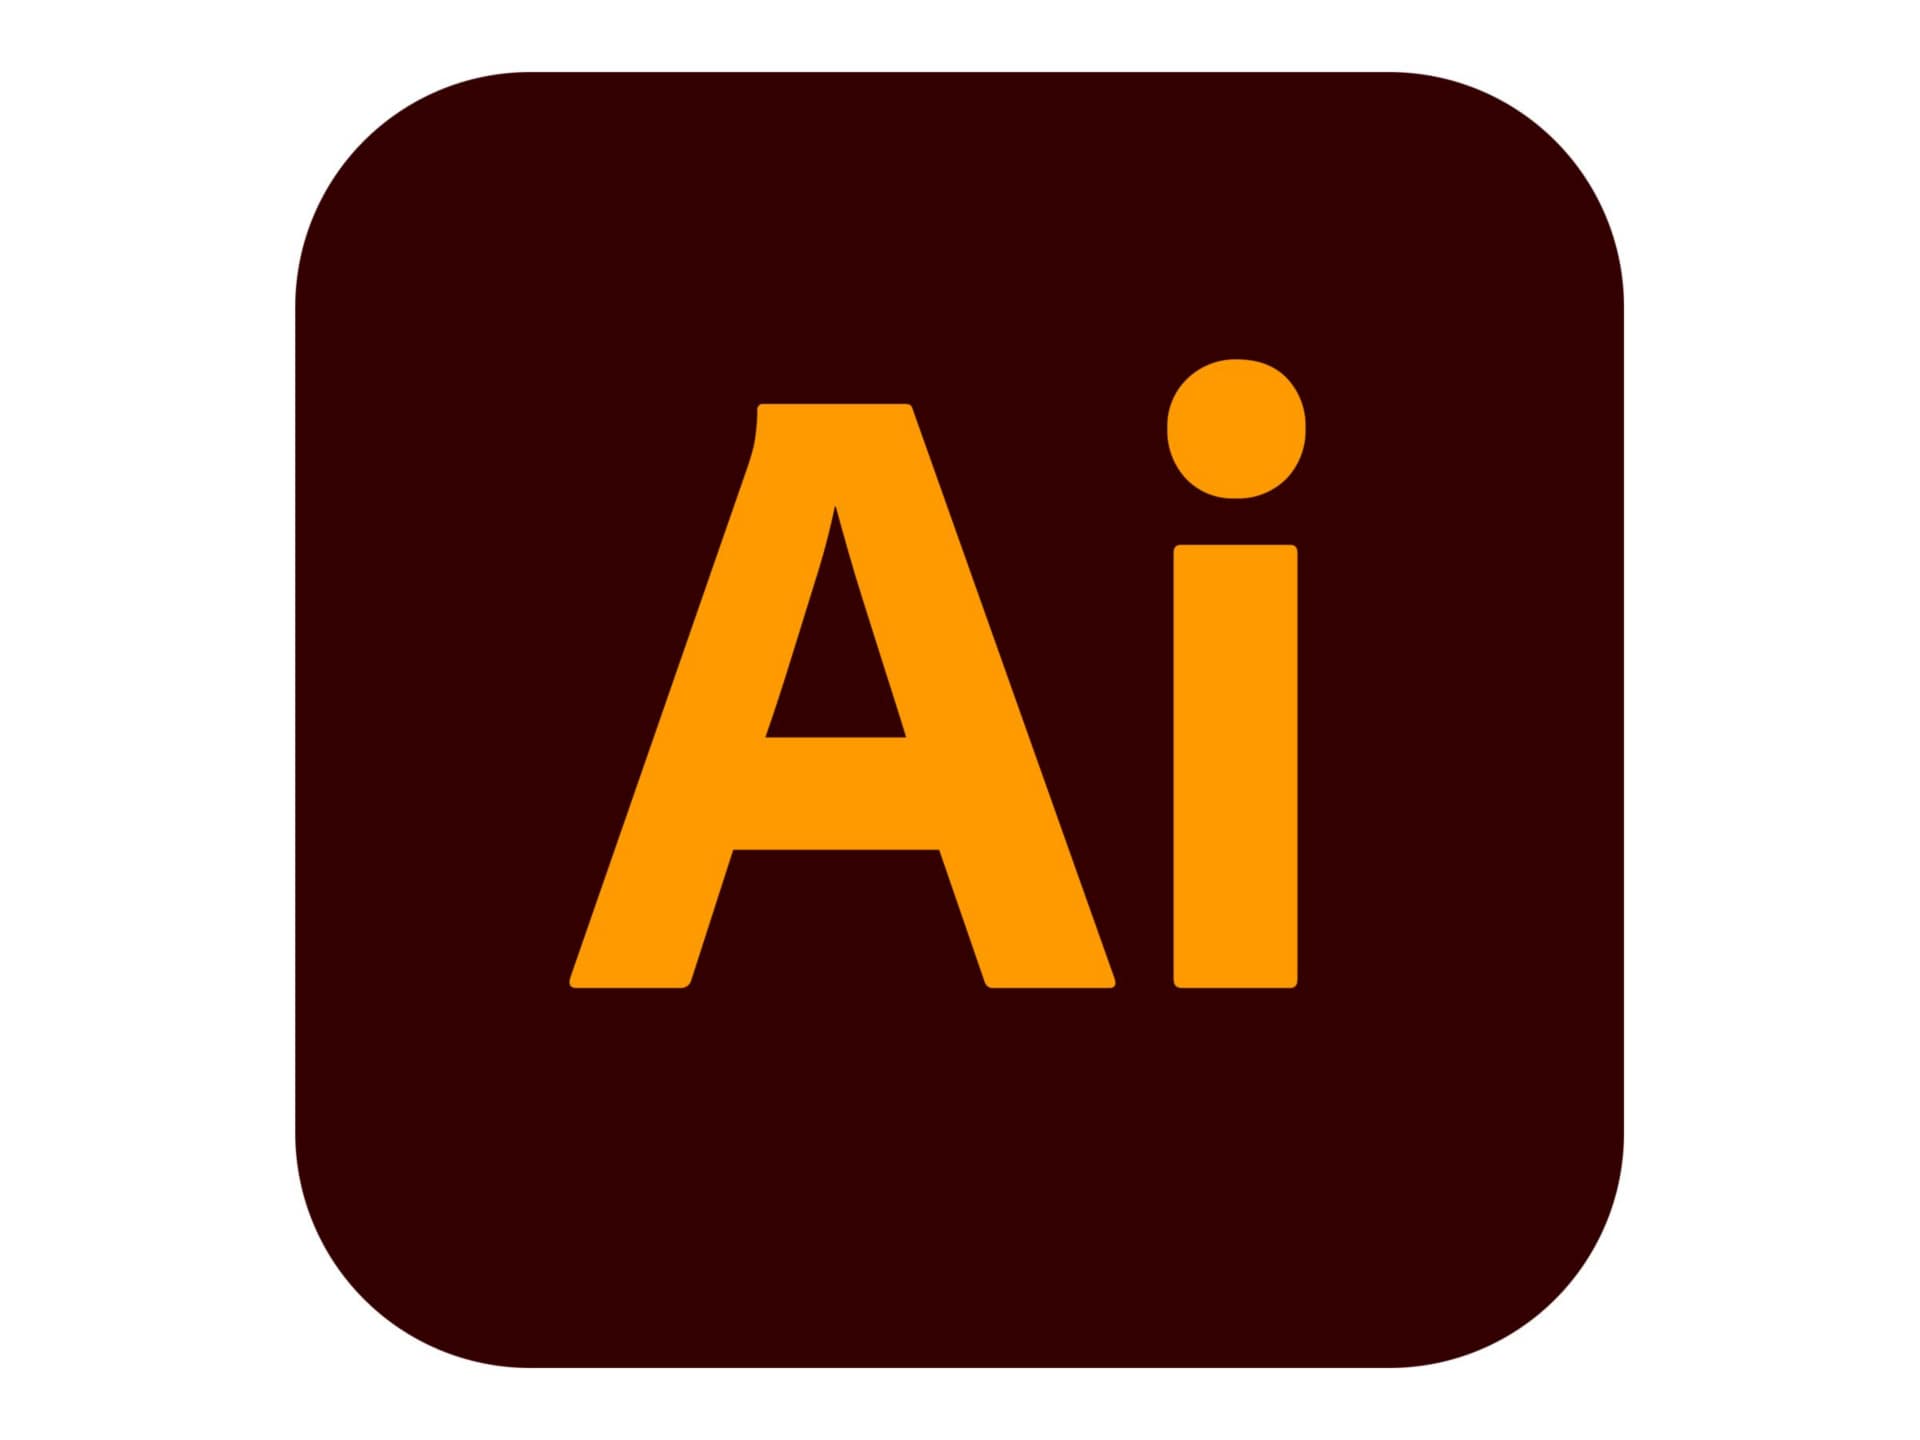 Adobe Illustrator CC for Enterprise - Subscription New (1 month) - 1 named